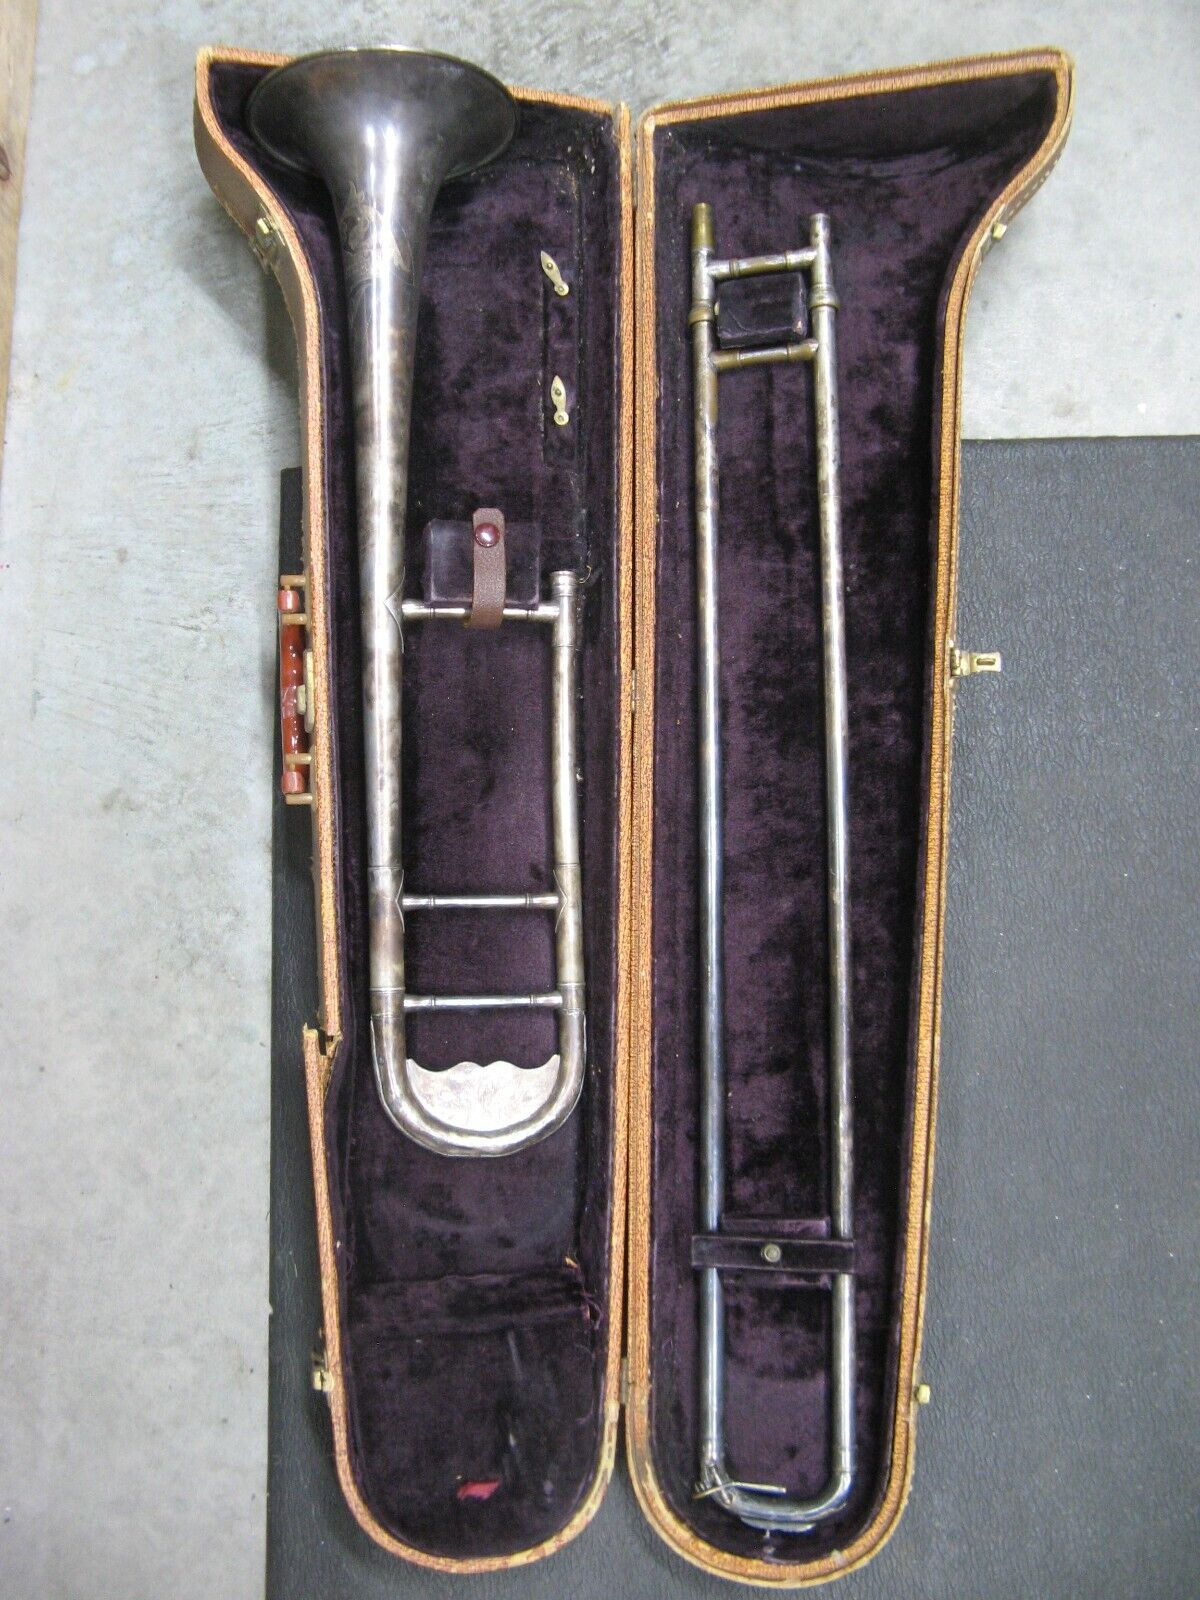 The Buescher Grand Trombone Model 38 Lp - 1925 - Case And Mouthpiece